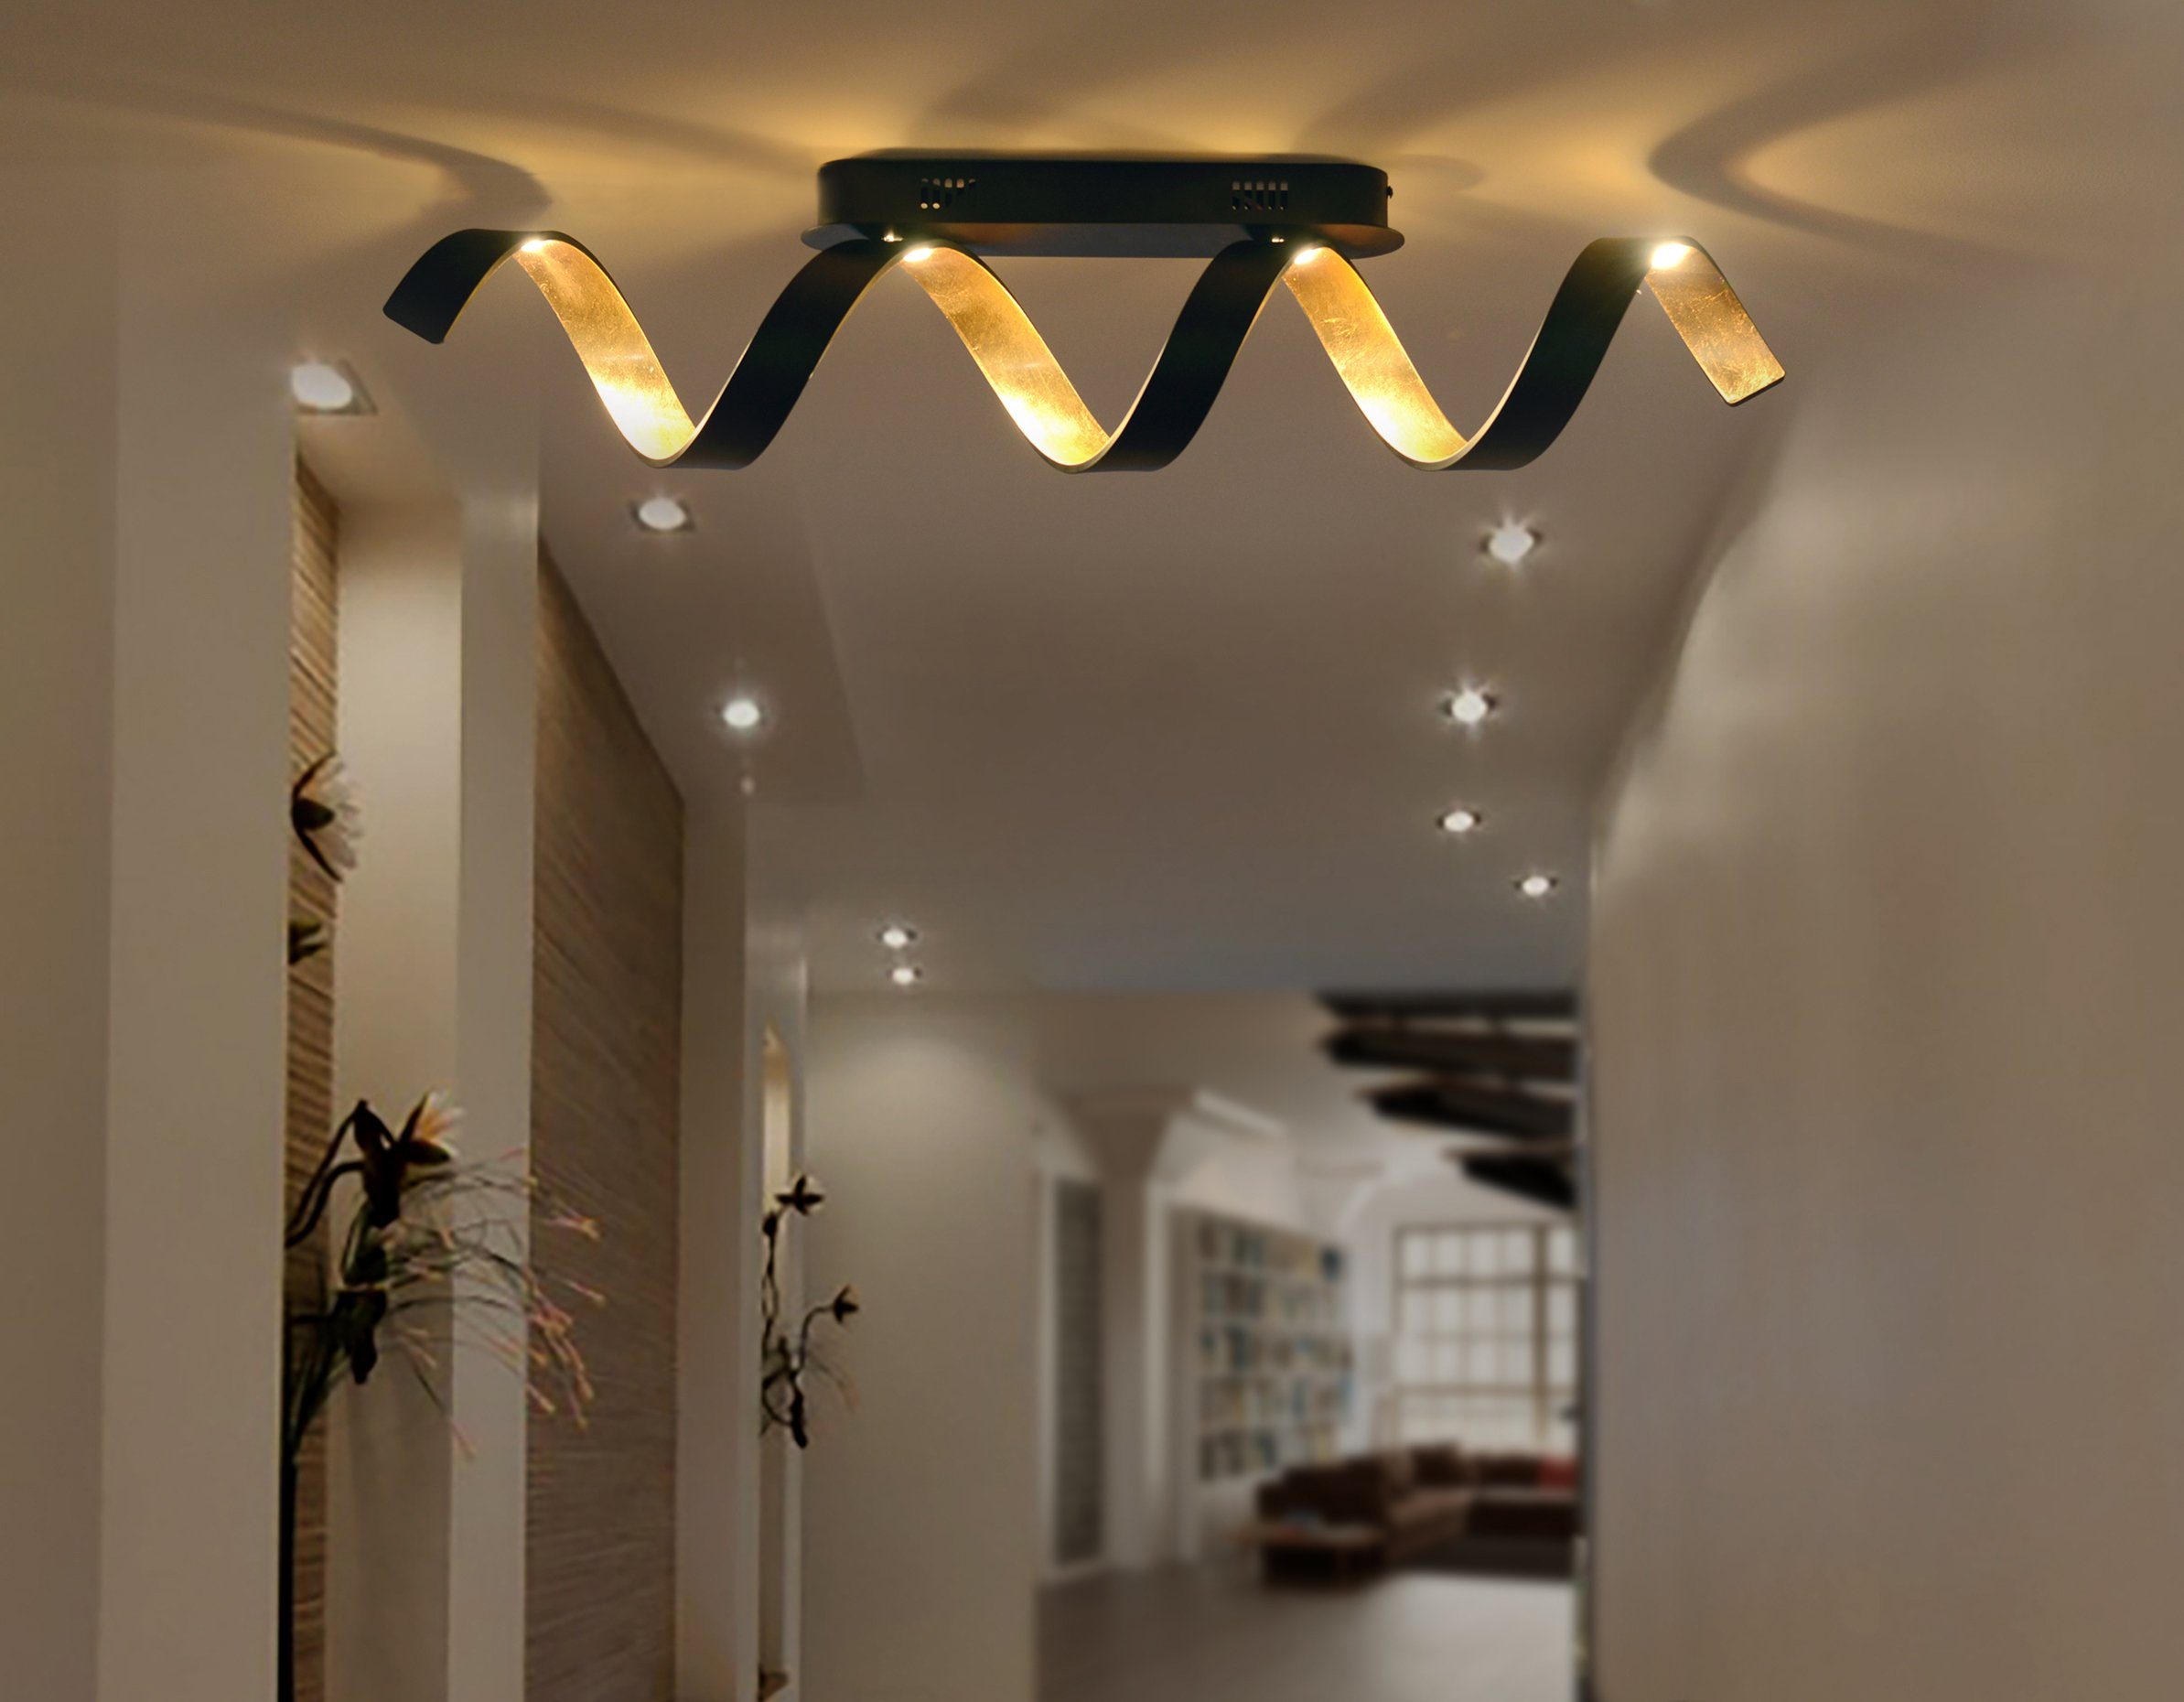 Design HELIX, integriert, LED LUCE Warmweiß fest LED Deckenleuchte